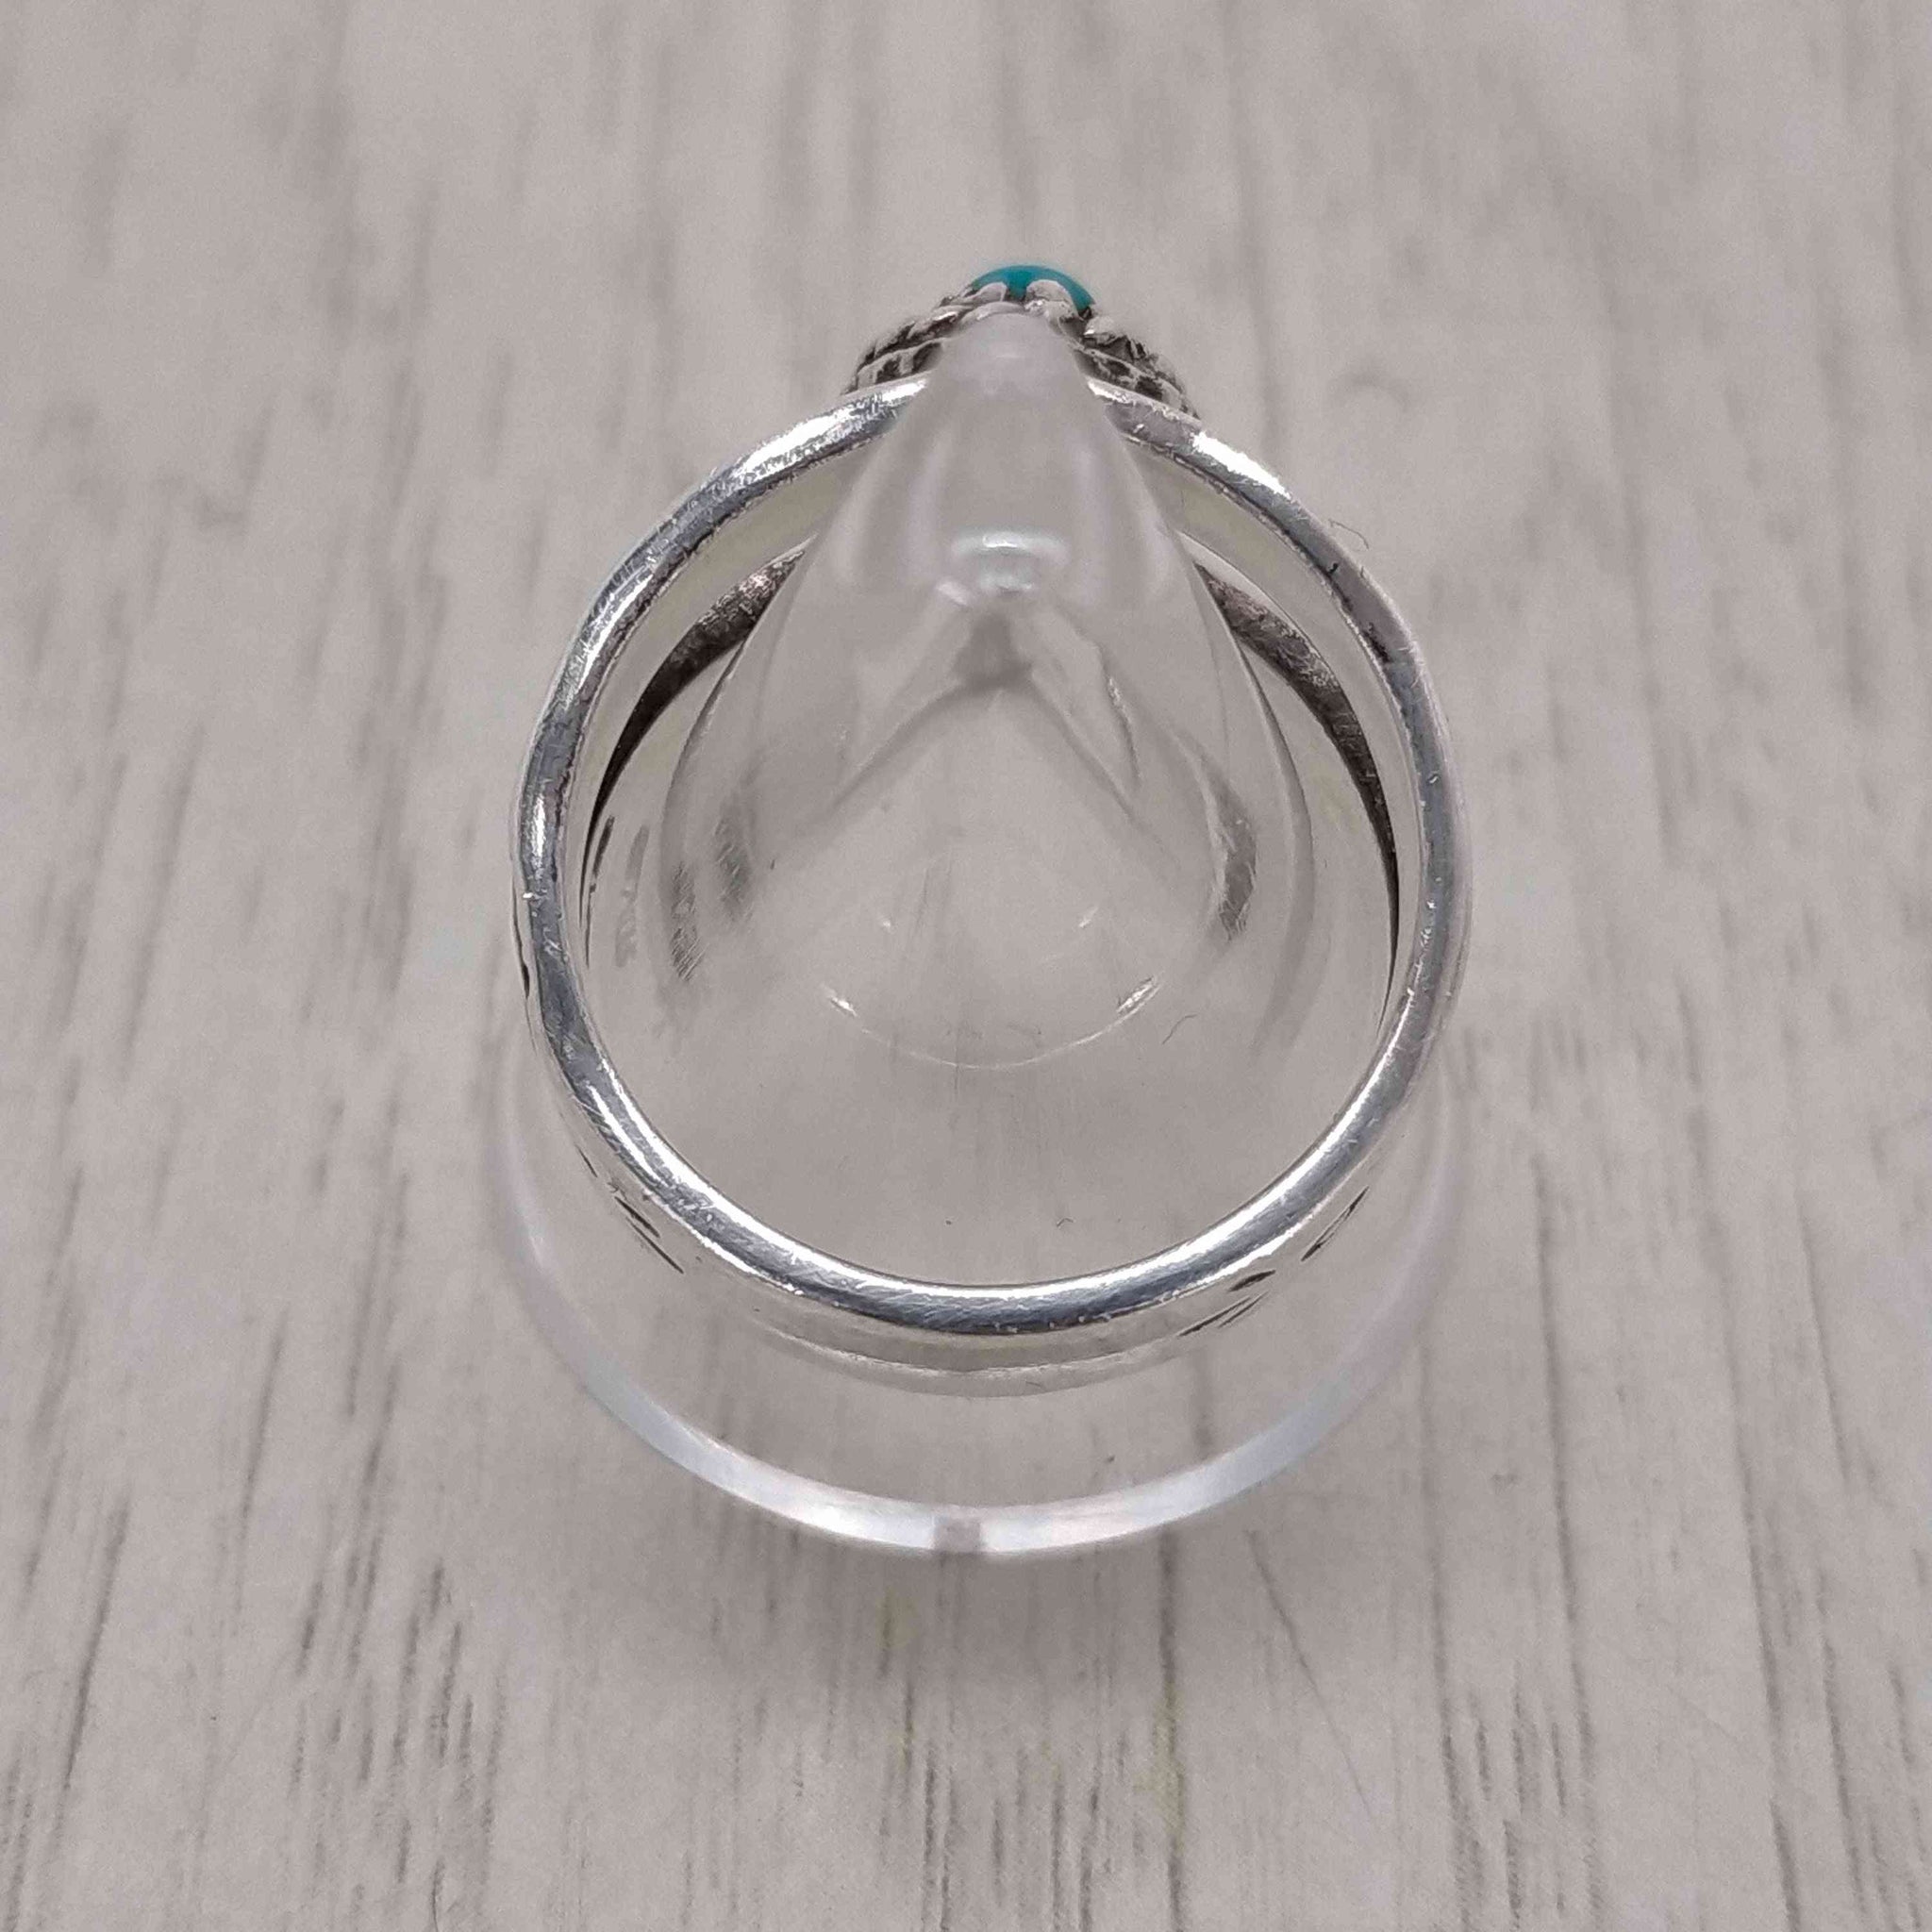 VIVIFY(ビビファイ)Turquoise Ring